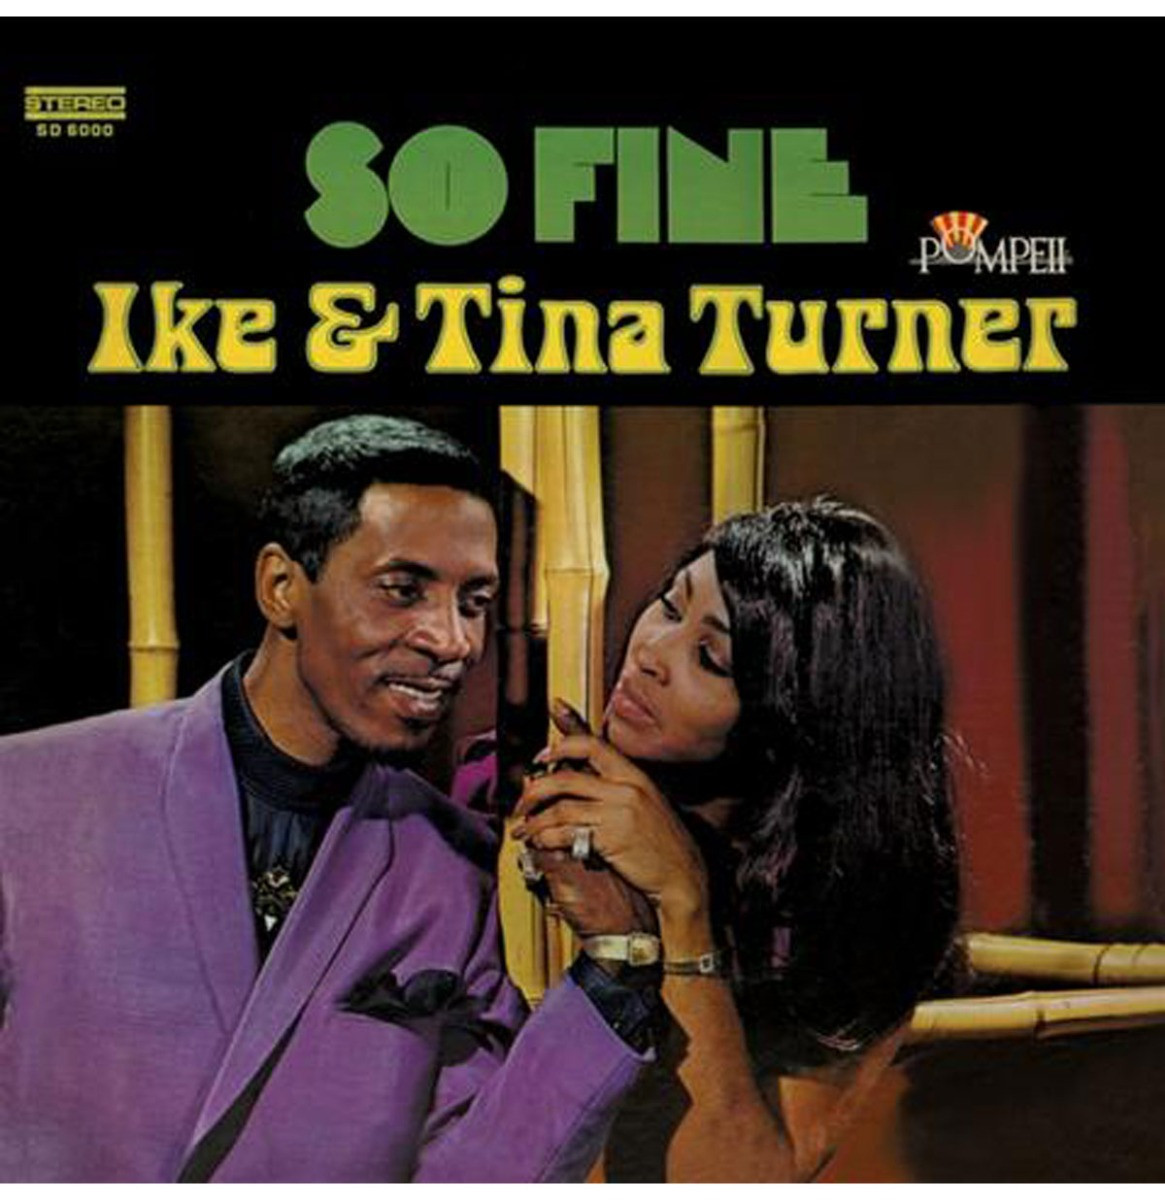 Ike & Tina Turner - So Fine LP